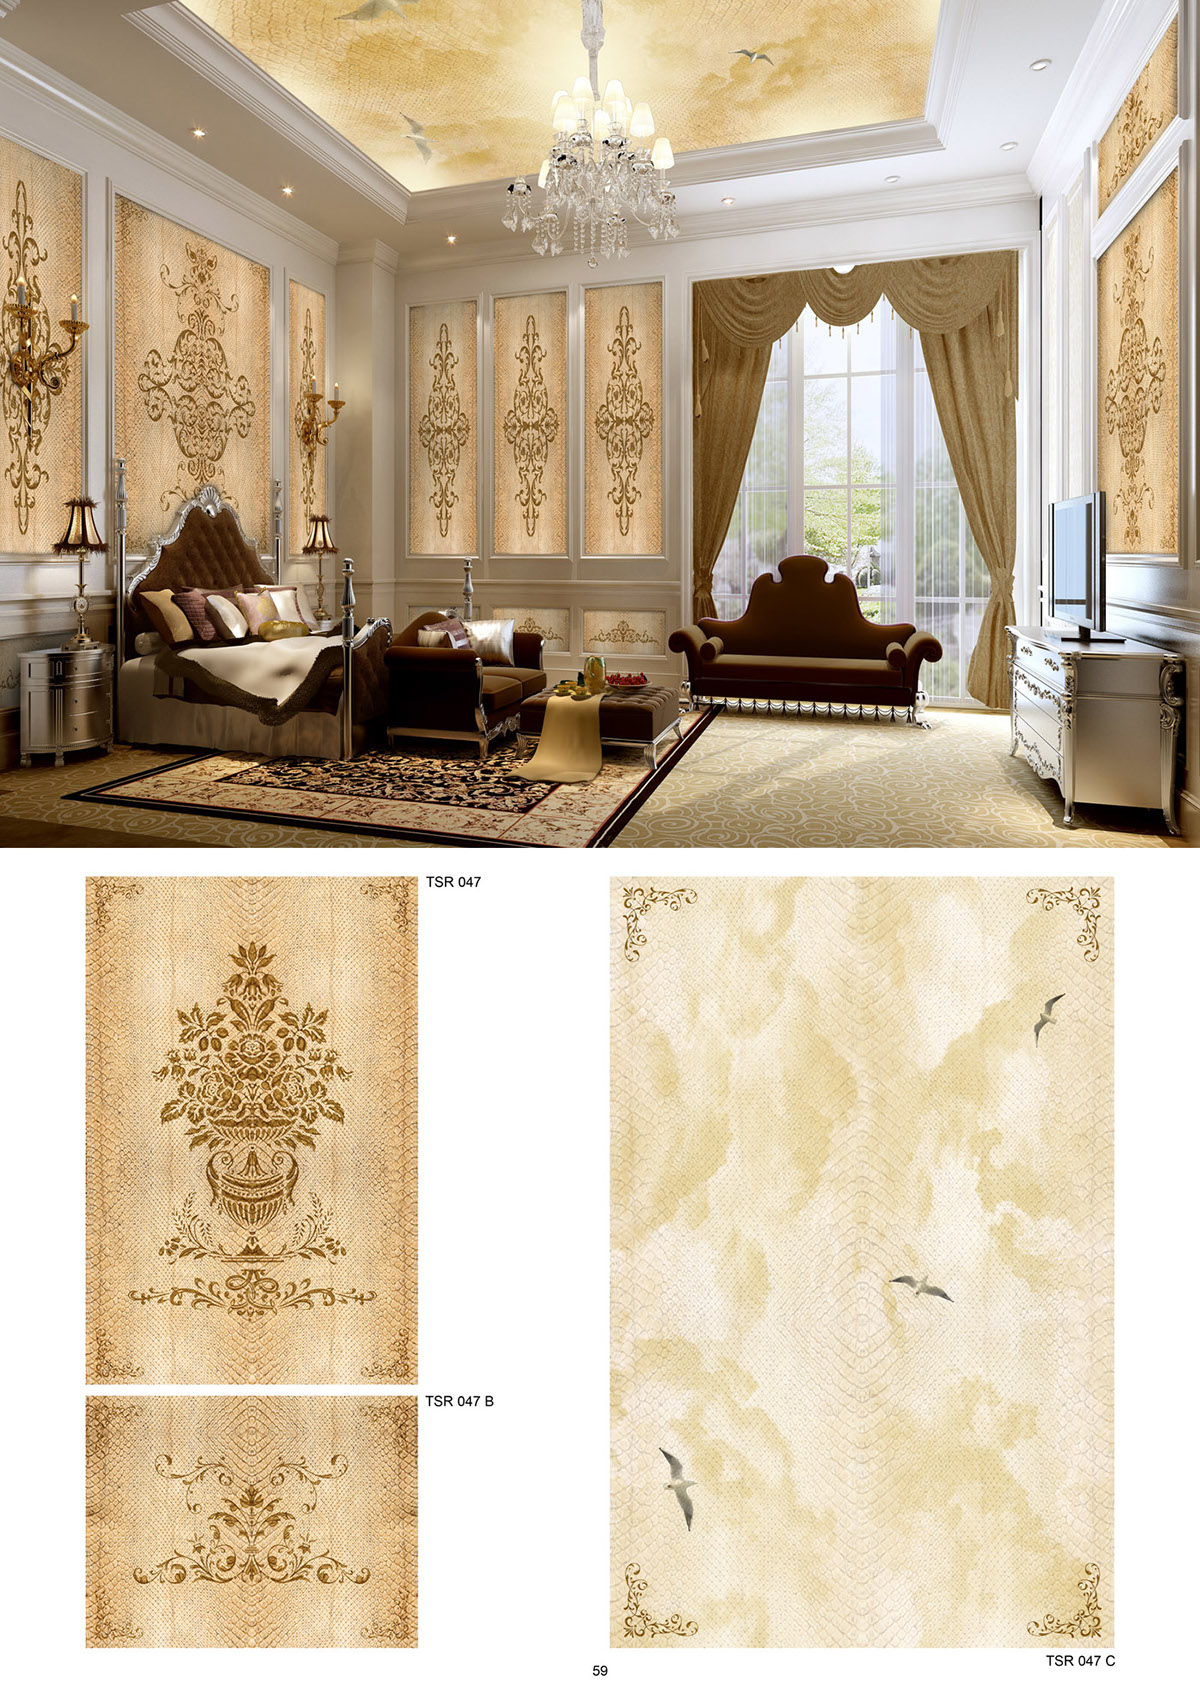 walldecor wallart wallpaper fresco decorative homedecor luxury luxuryhomes MADEINITALY artwork